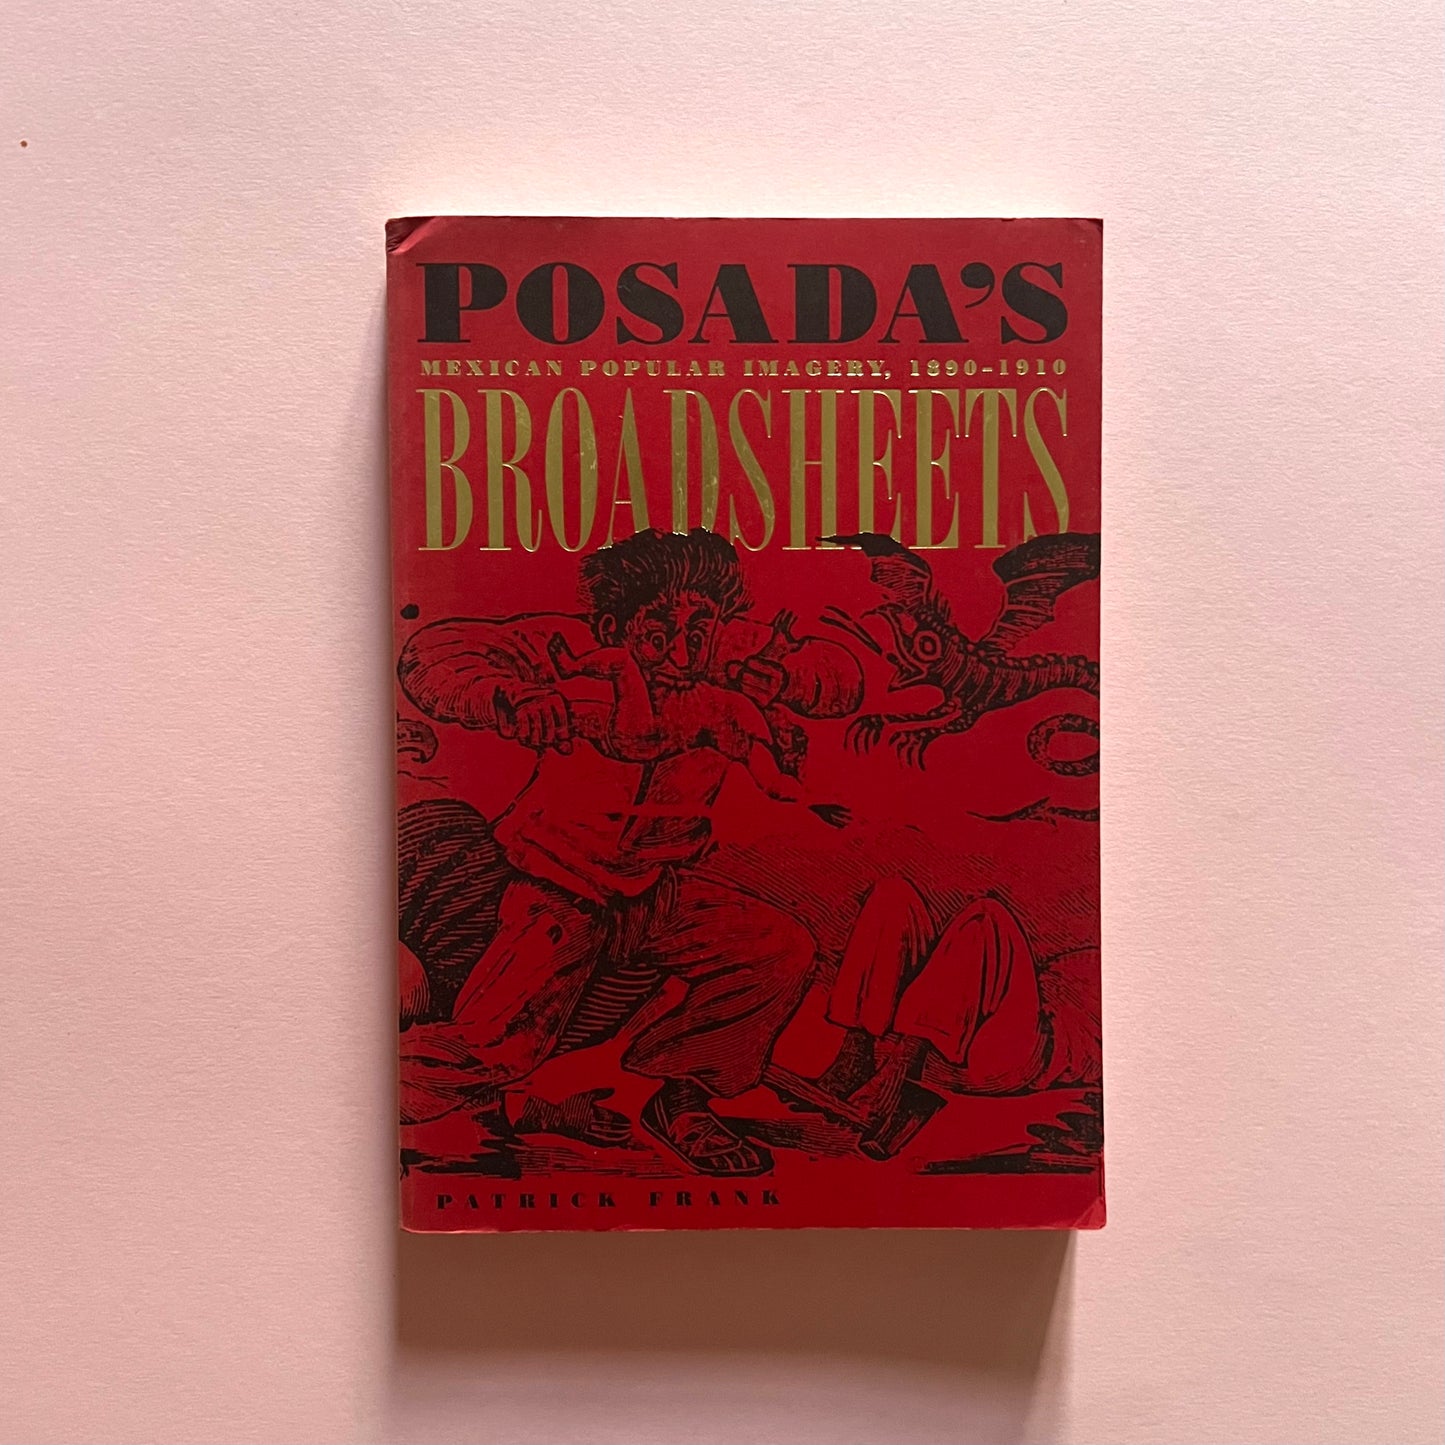 Posada’s Broadsheets: Mexican Popular Imagery, 1890-1910